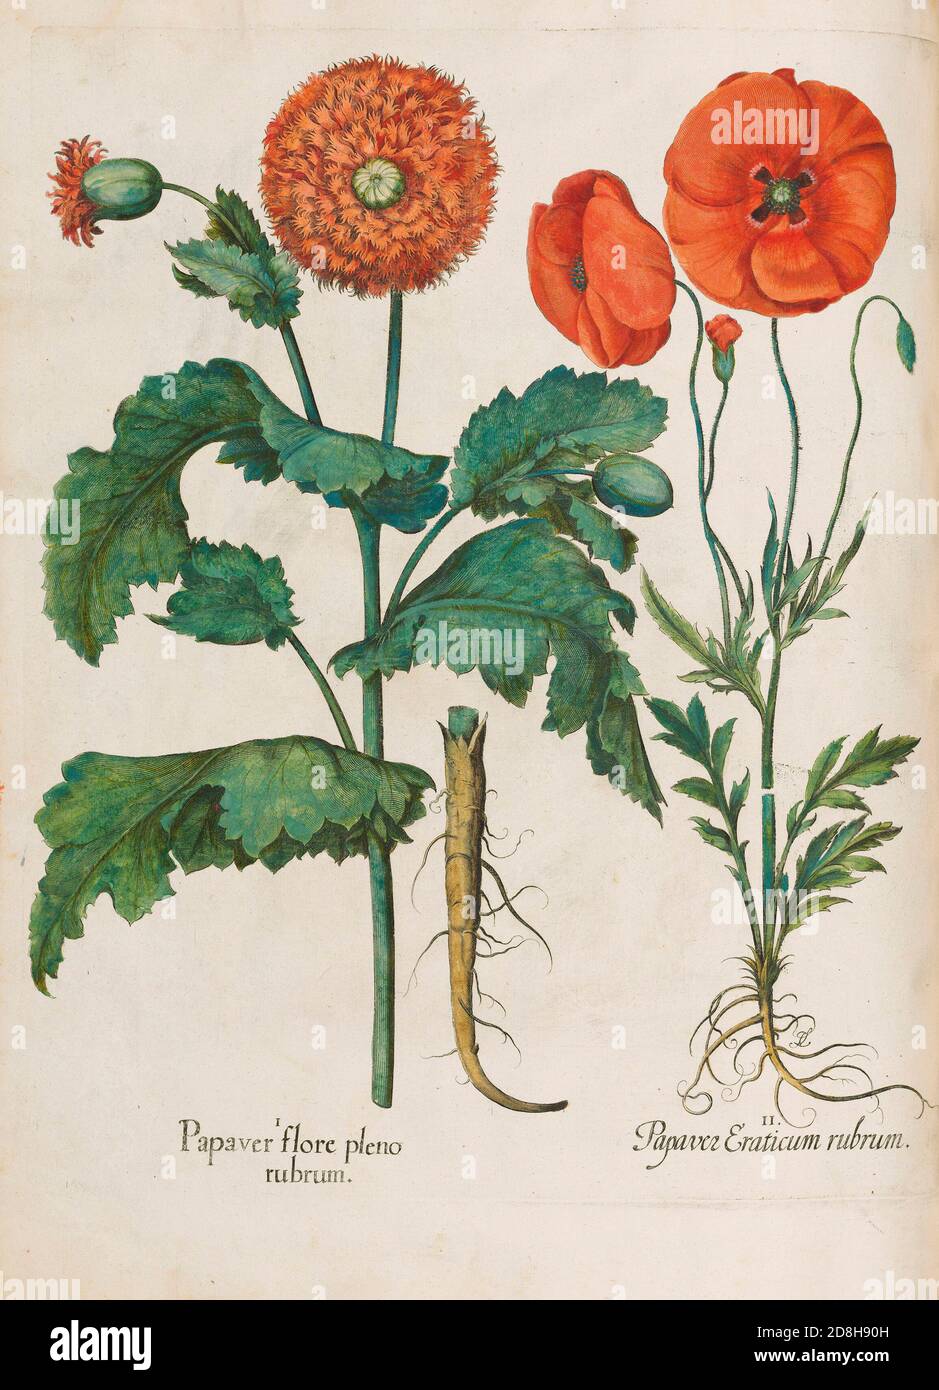 Papaver flore pleno rubrum and Papaver Eraticum rubrum, botanical illustration by Basil Besler from the The Hortus Eystettensis, 1613. Stock Photo